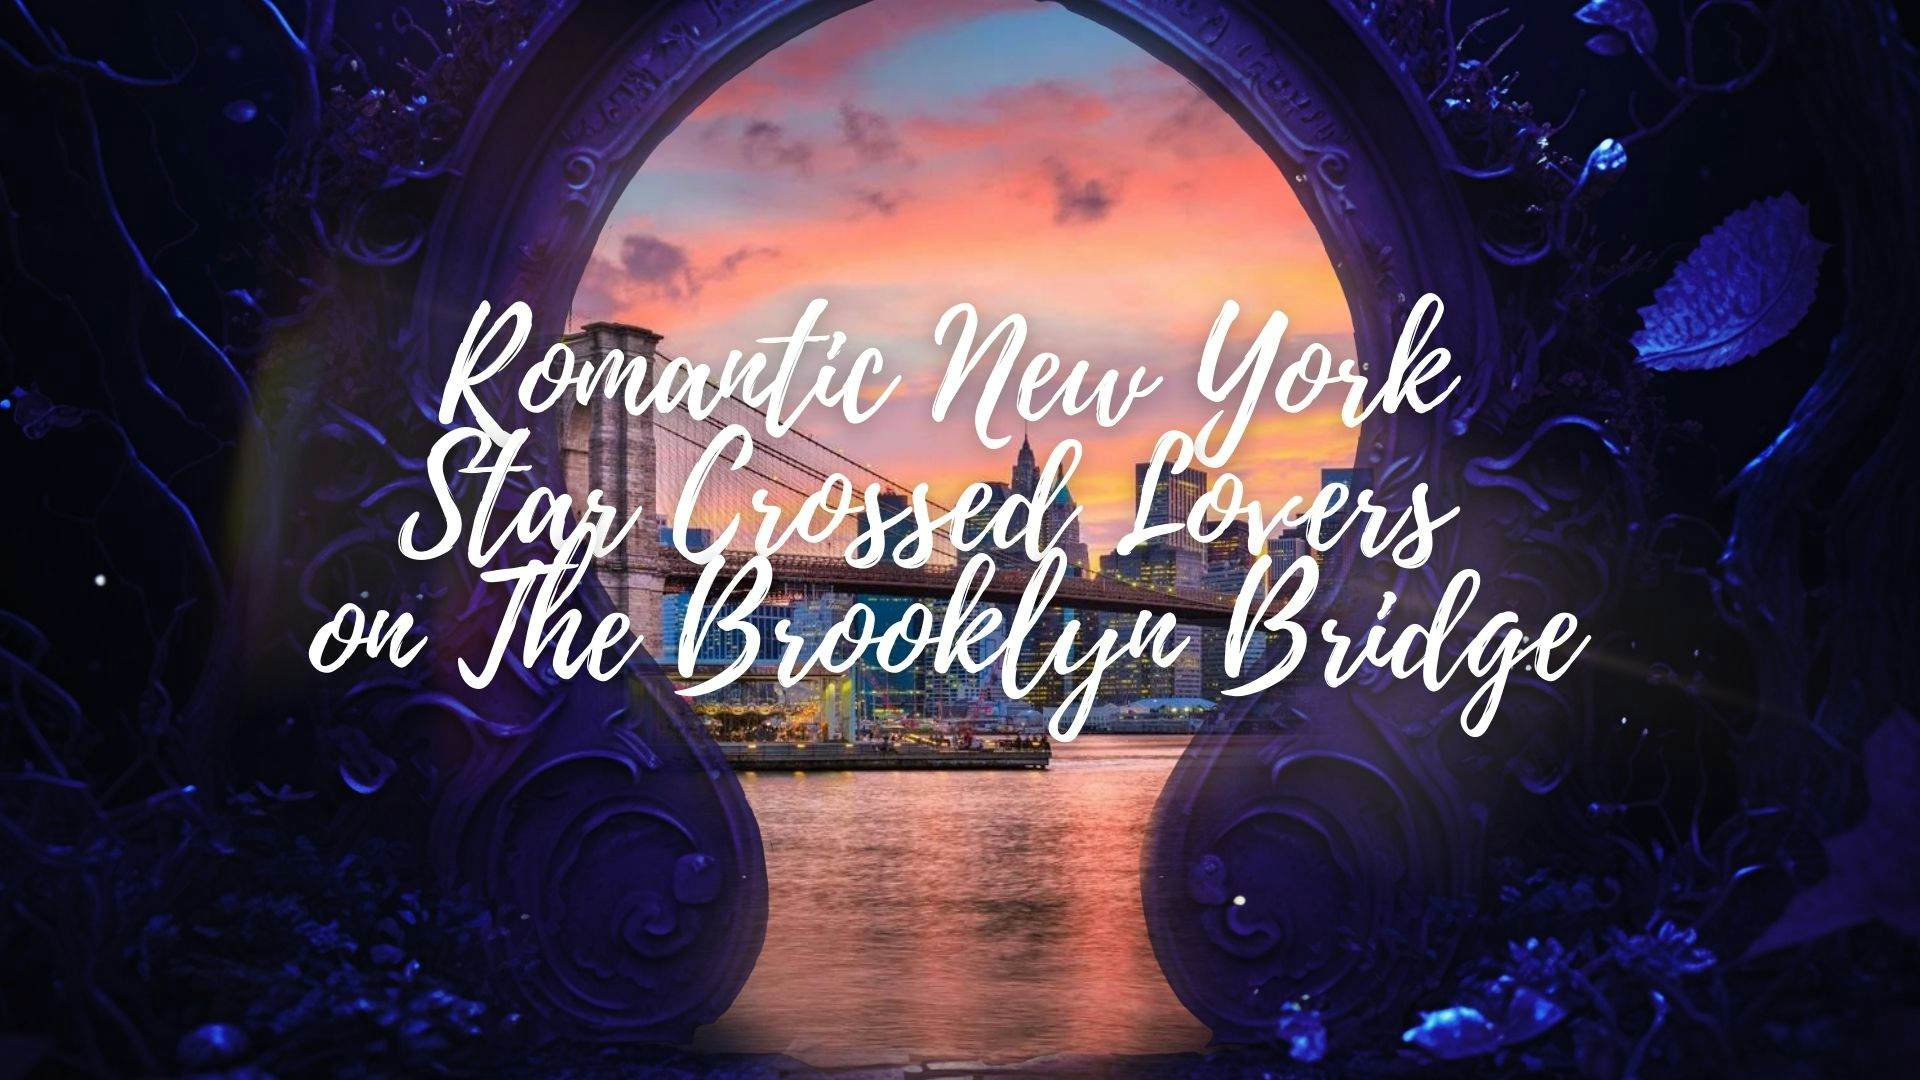 Romantic New York: Star-crossed lovers on the Brooklyn Bridge image